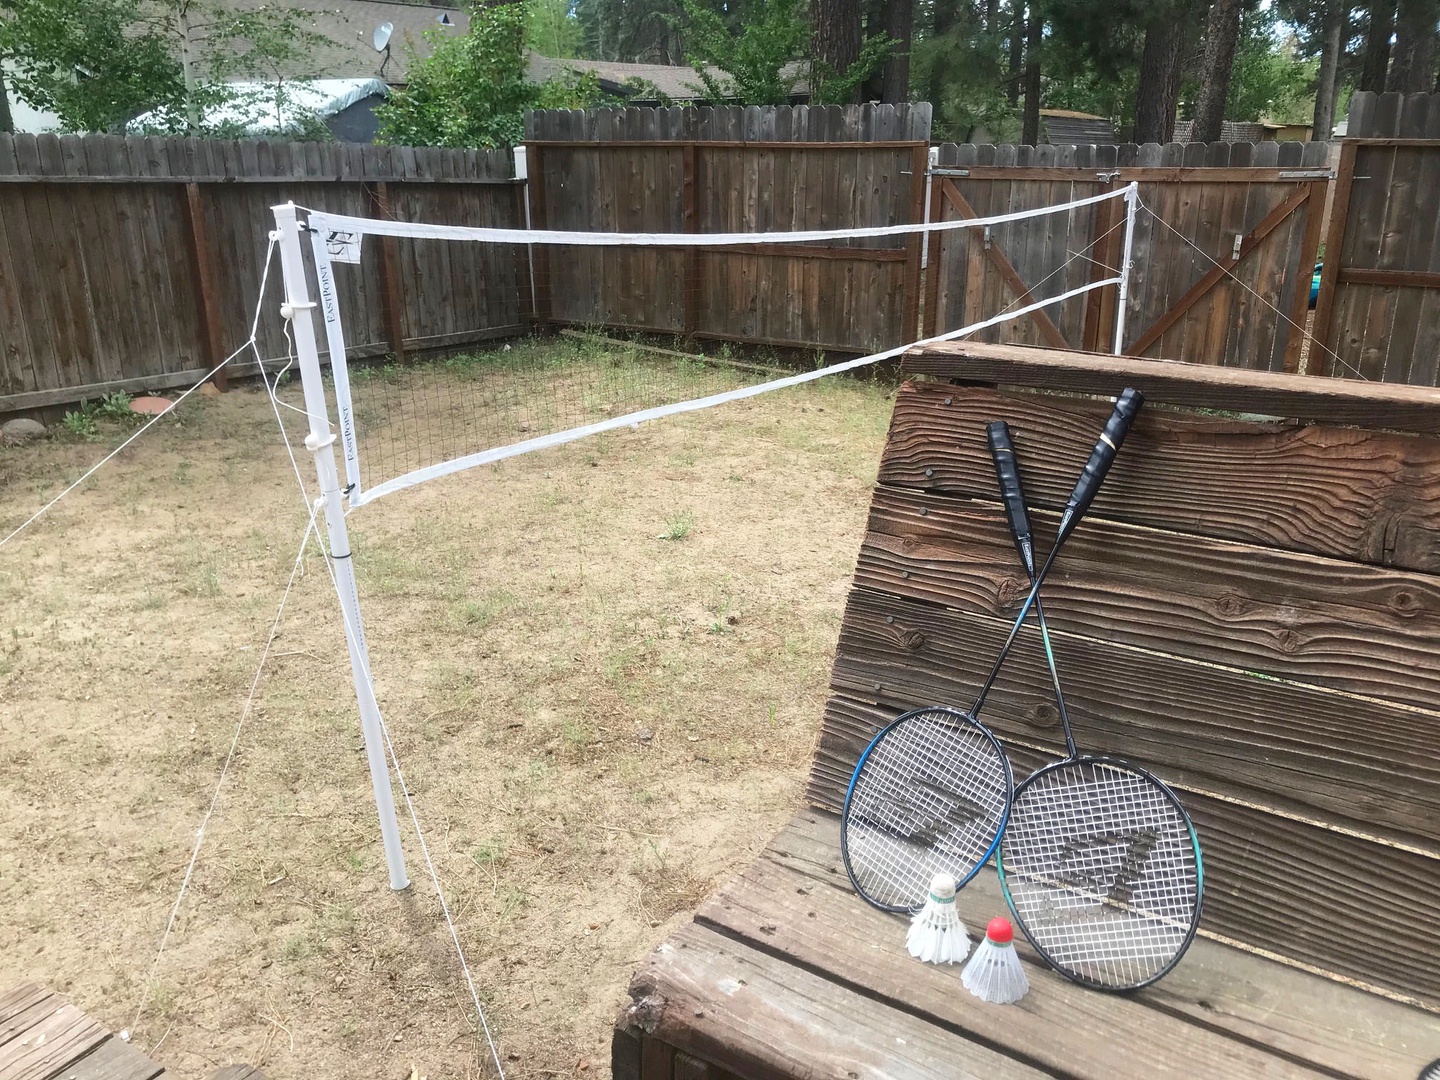 Badminton in the backyard